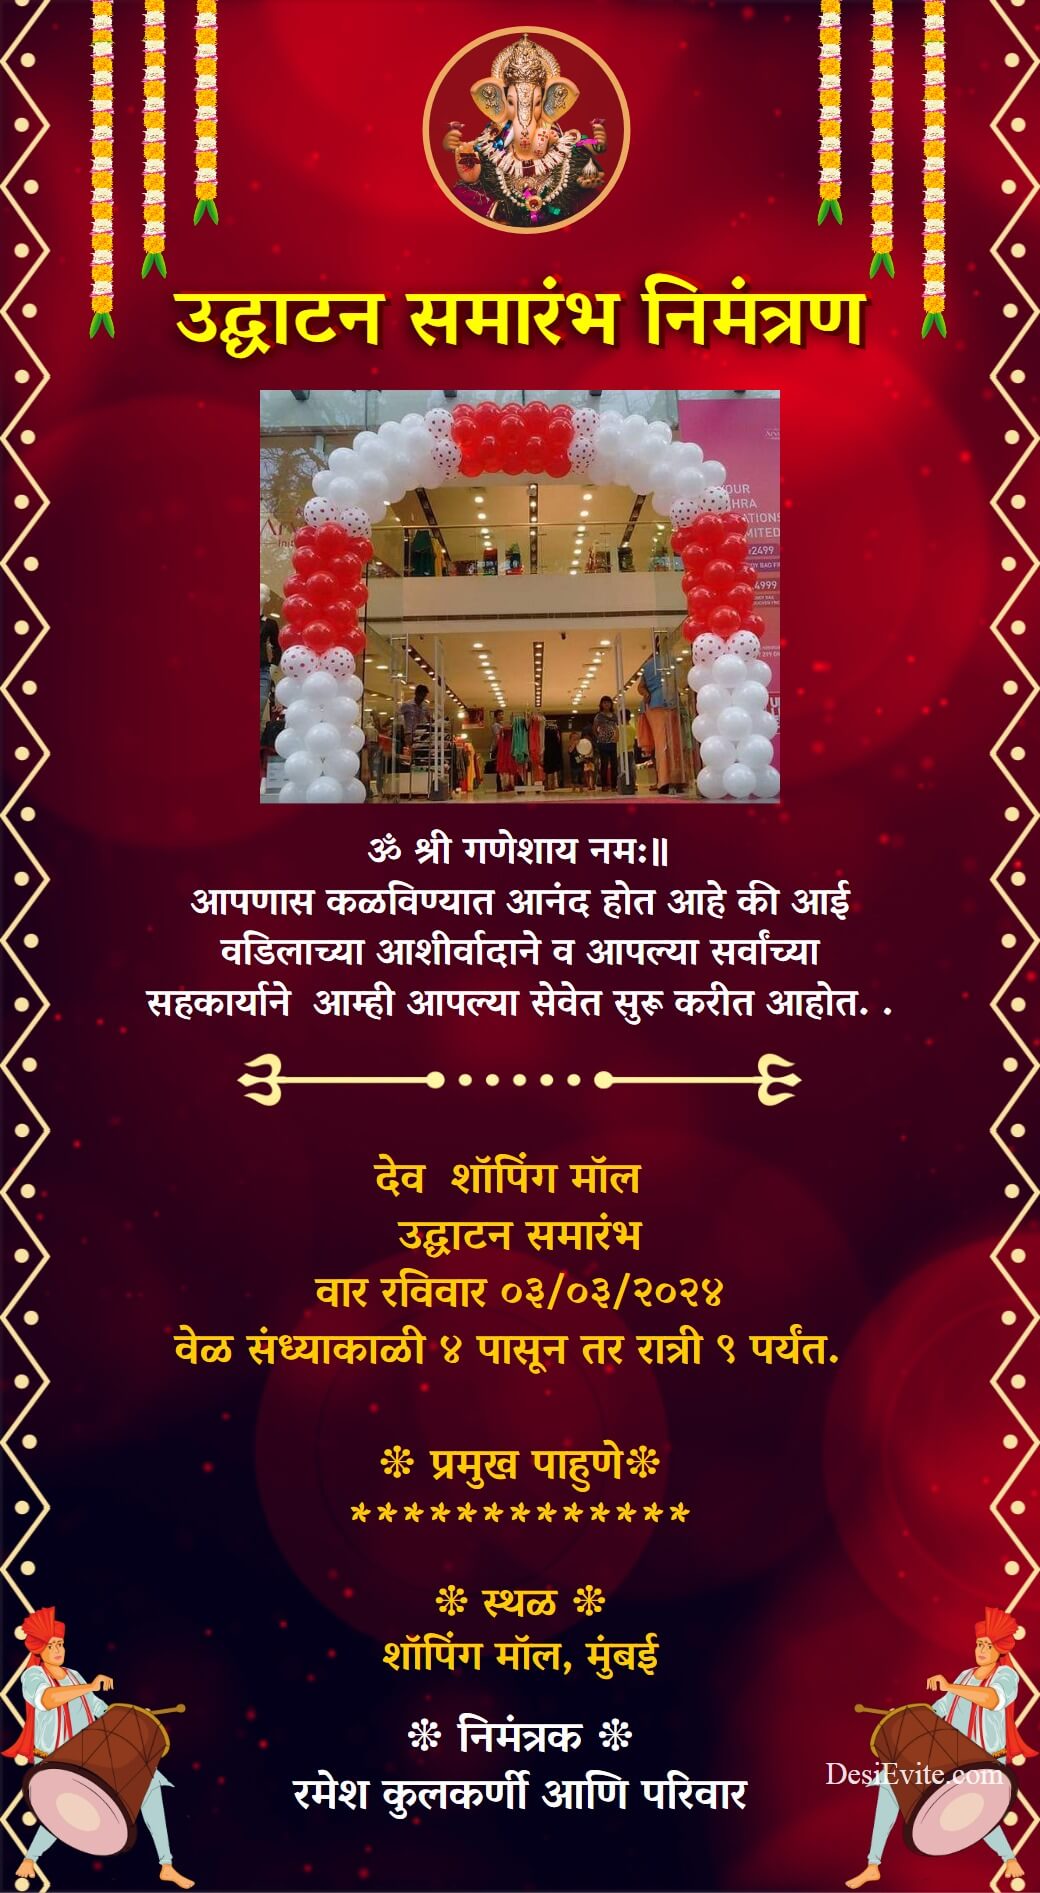 Udghatan samarambh invitation card marathi